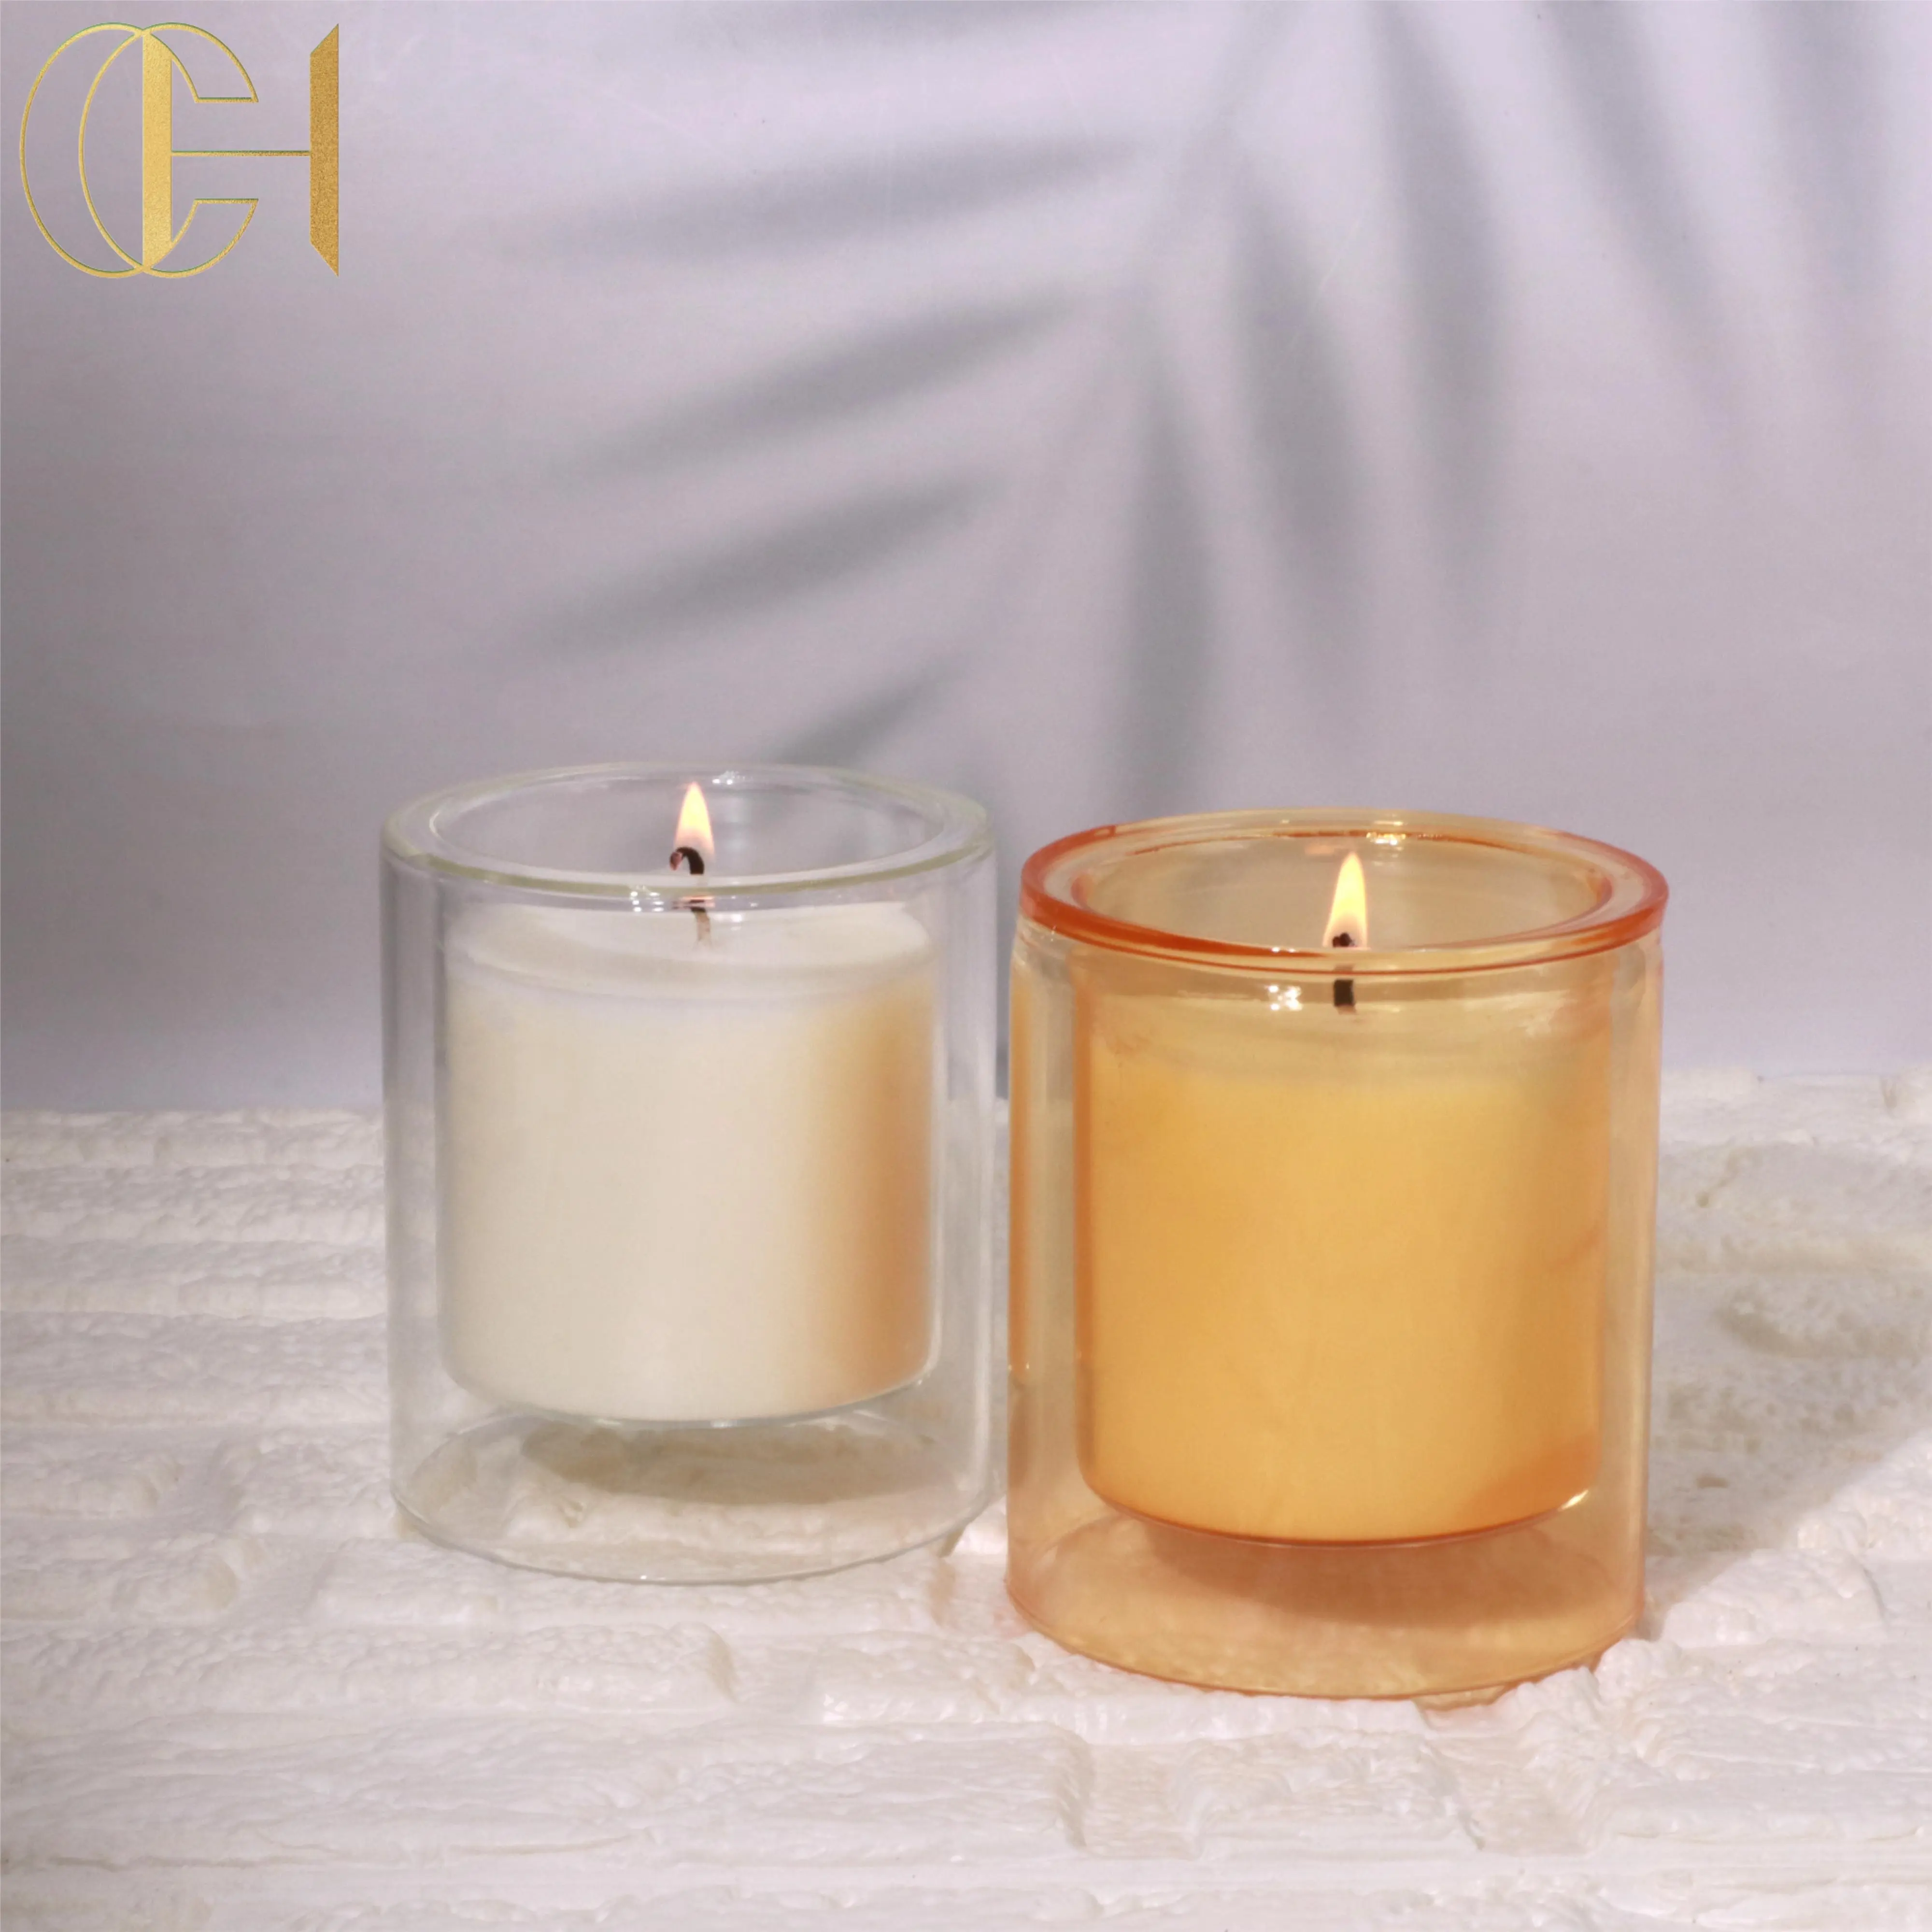 C & H Naturals Vente à chaud de bougies parfumées en cire de soja en vente en gros Coffret cadeau de bougies parfumées de luxe en pot de marbre